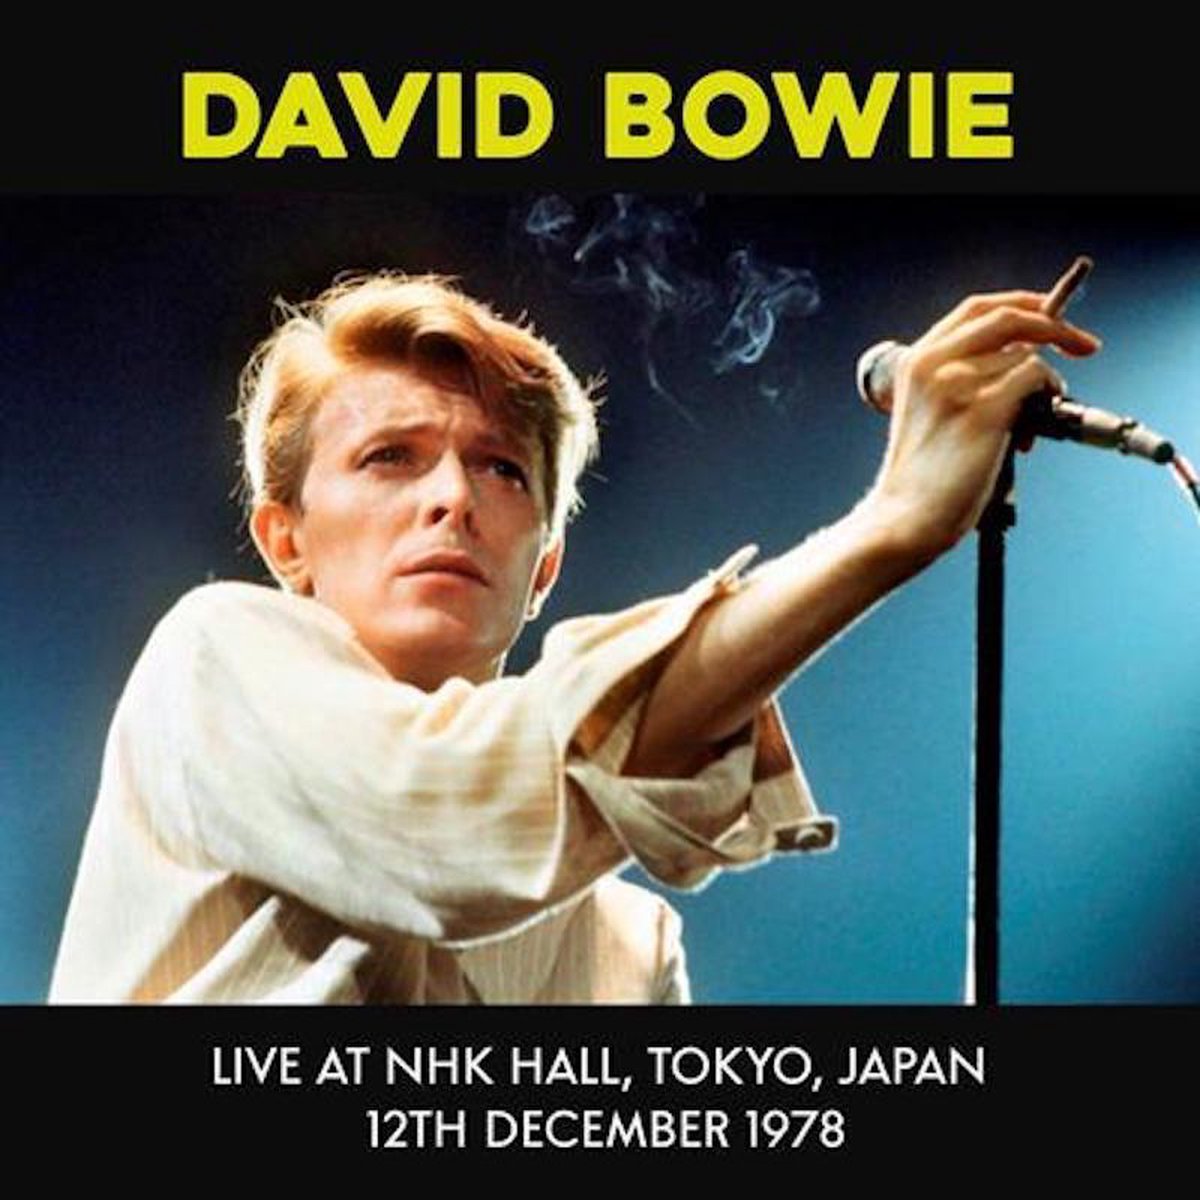 BOWIE DAVID - LIVE AT NHK HALL, TOKYO, JAPAN - 12TH DECEMBER 1978